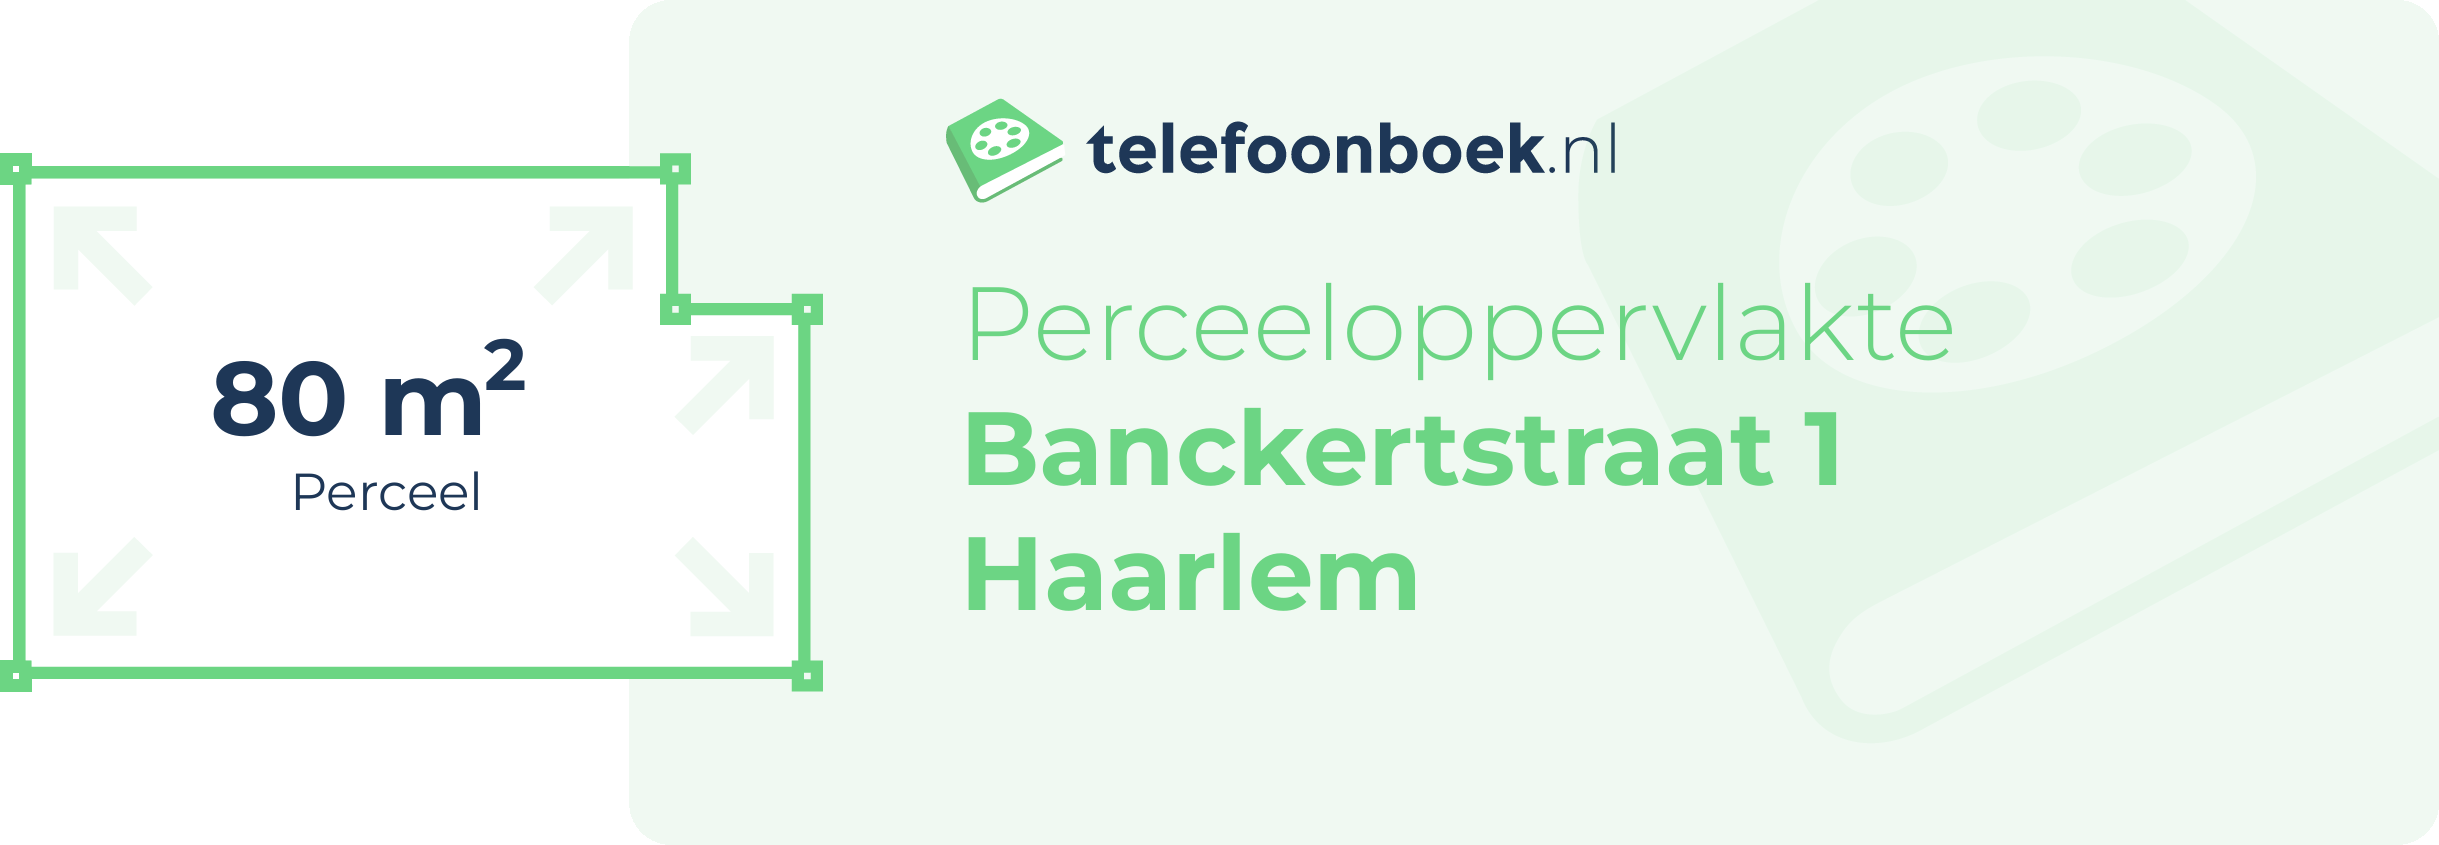 Perceeloppervlakte Banckertstraat 1 Haarlem